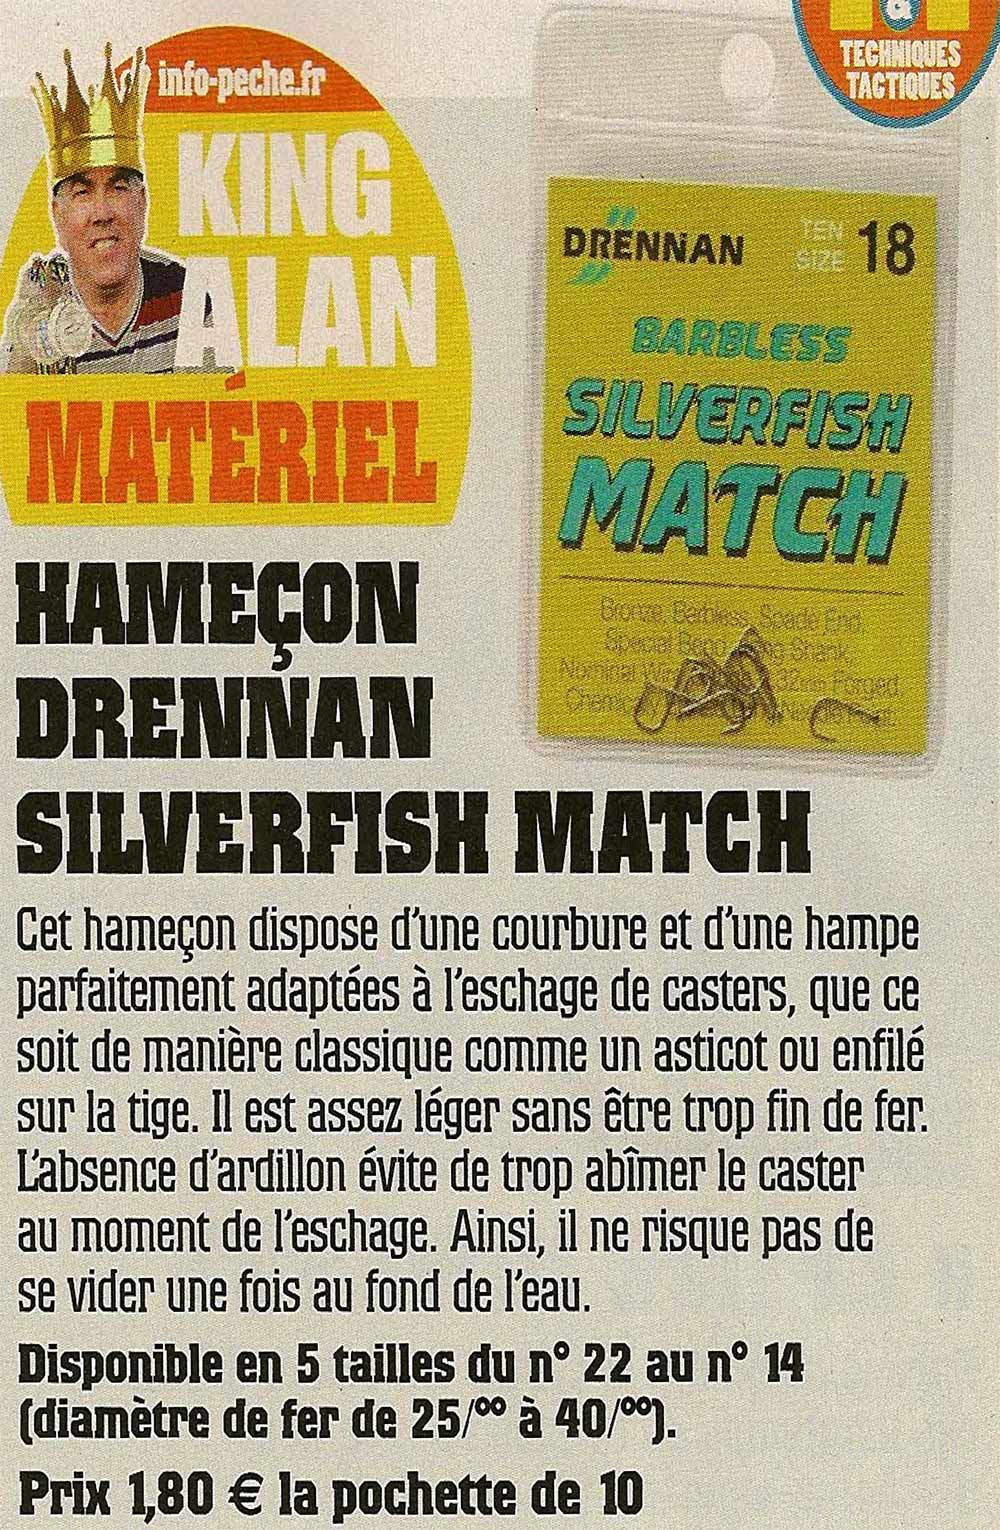 brennan silverfish match